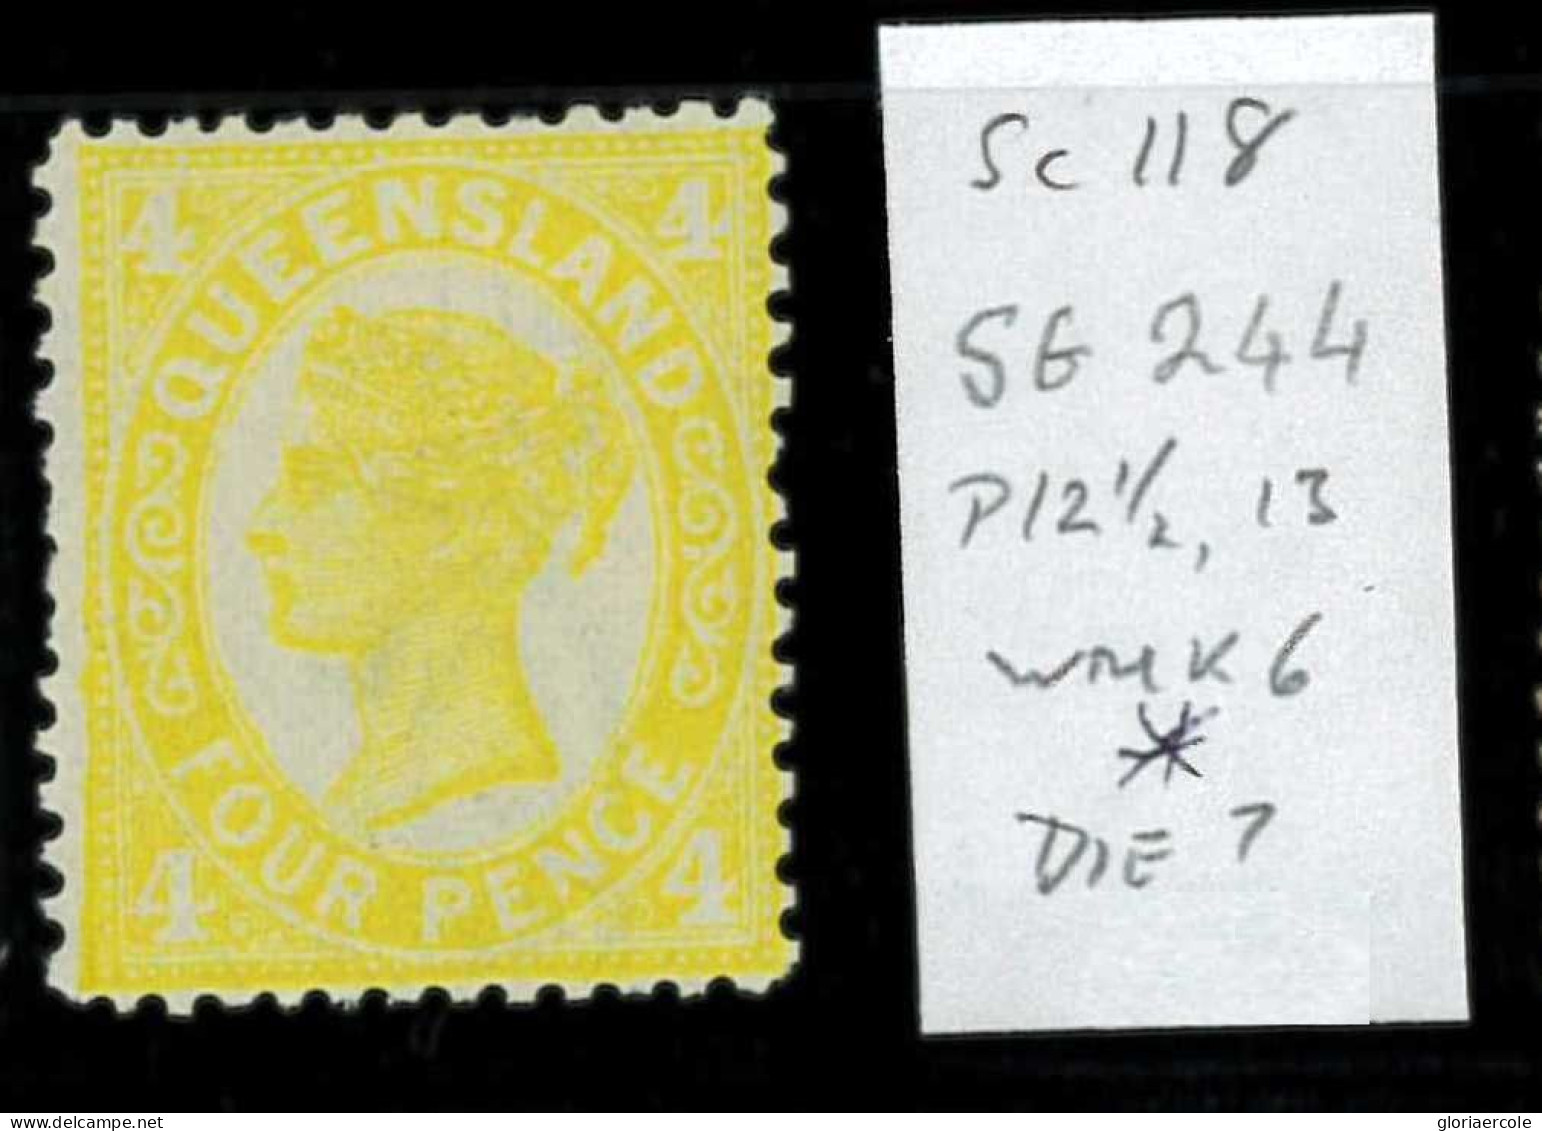 Aa5617i - Australia QUEENSLAND - STAMP - SG #  244 Die 7 -   Mint HINGED - Mint Stamps